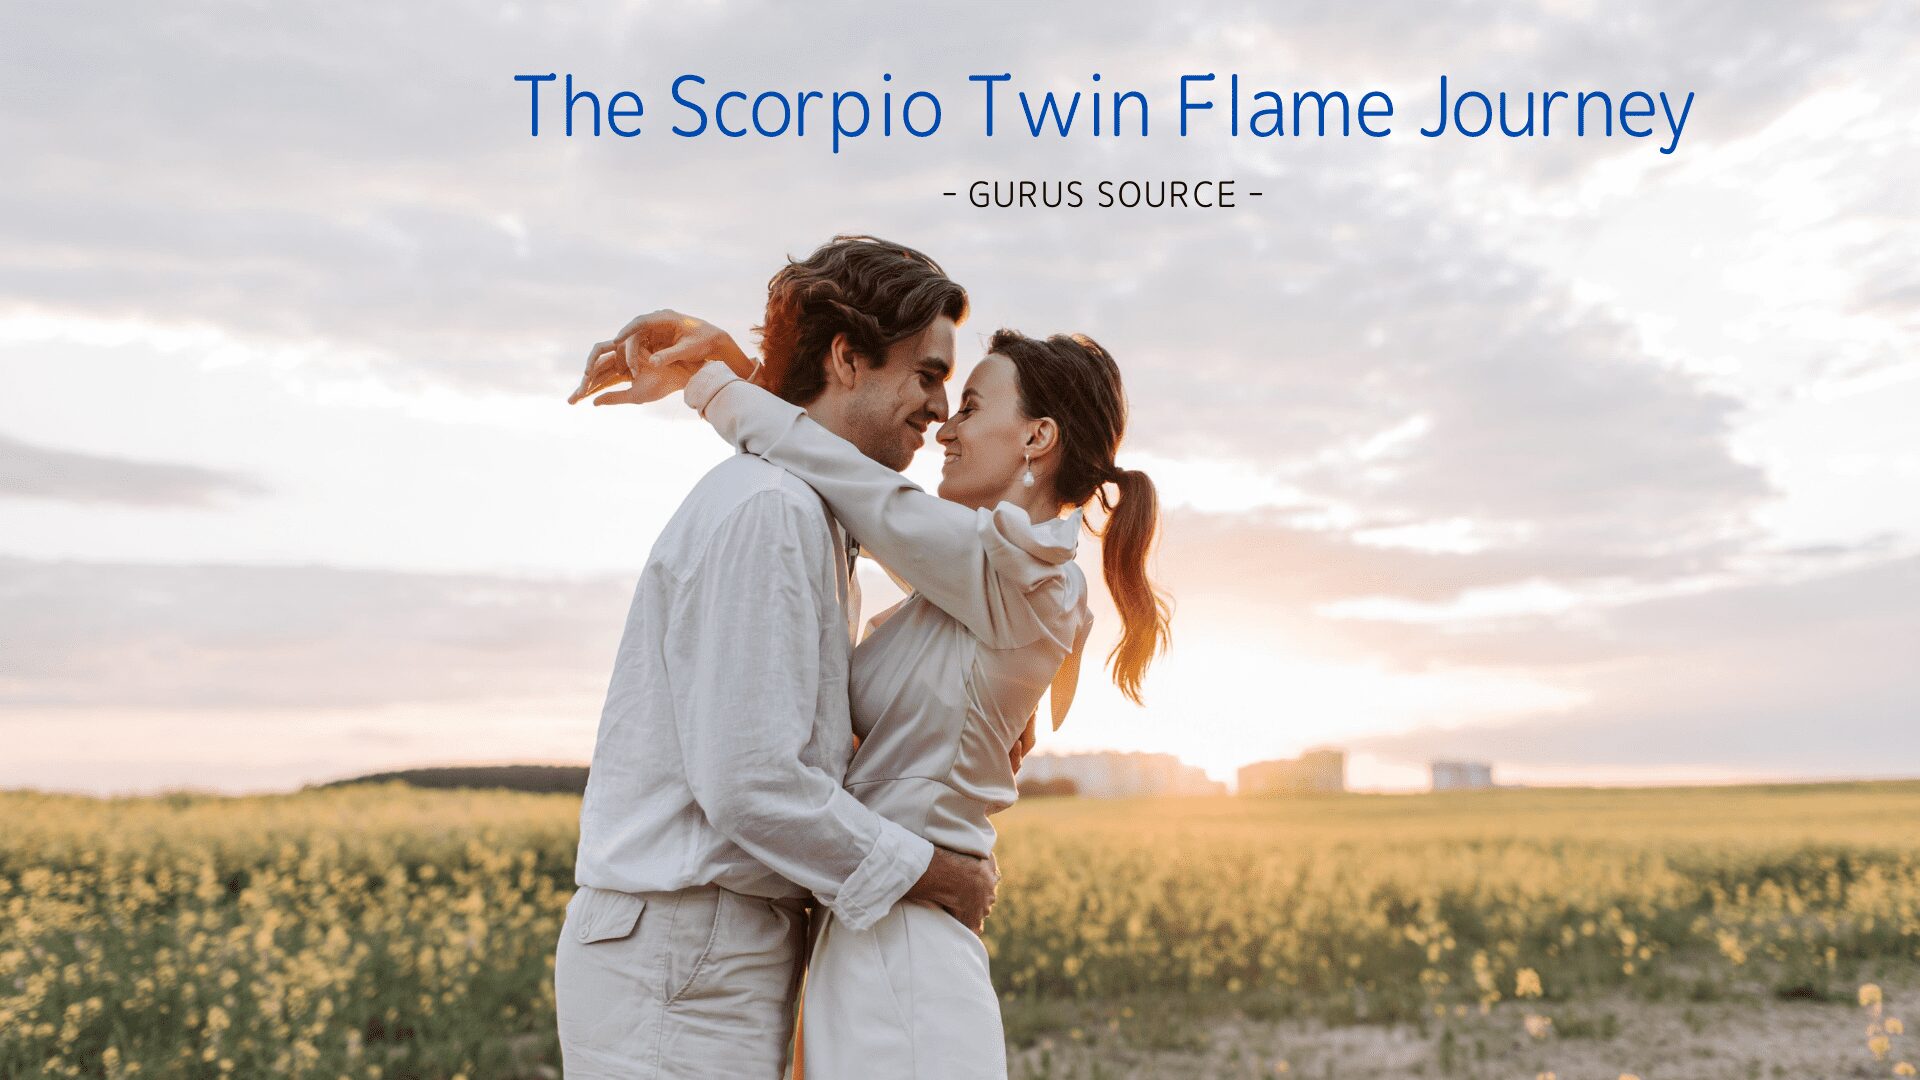 The Scorpio Twin Flame Journey